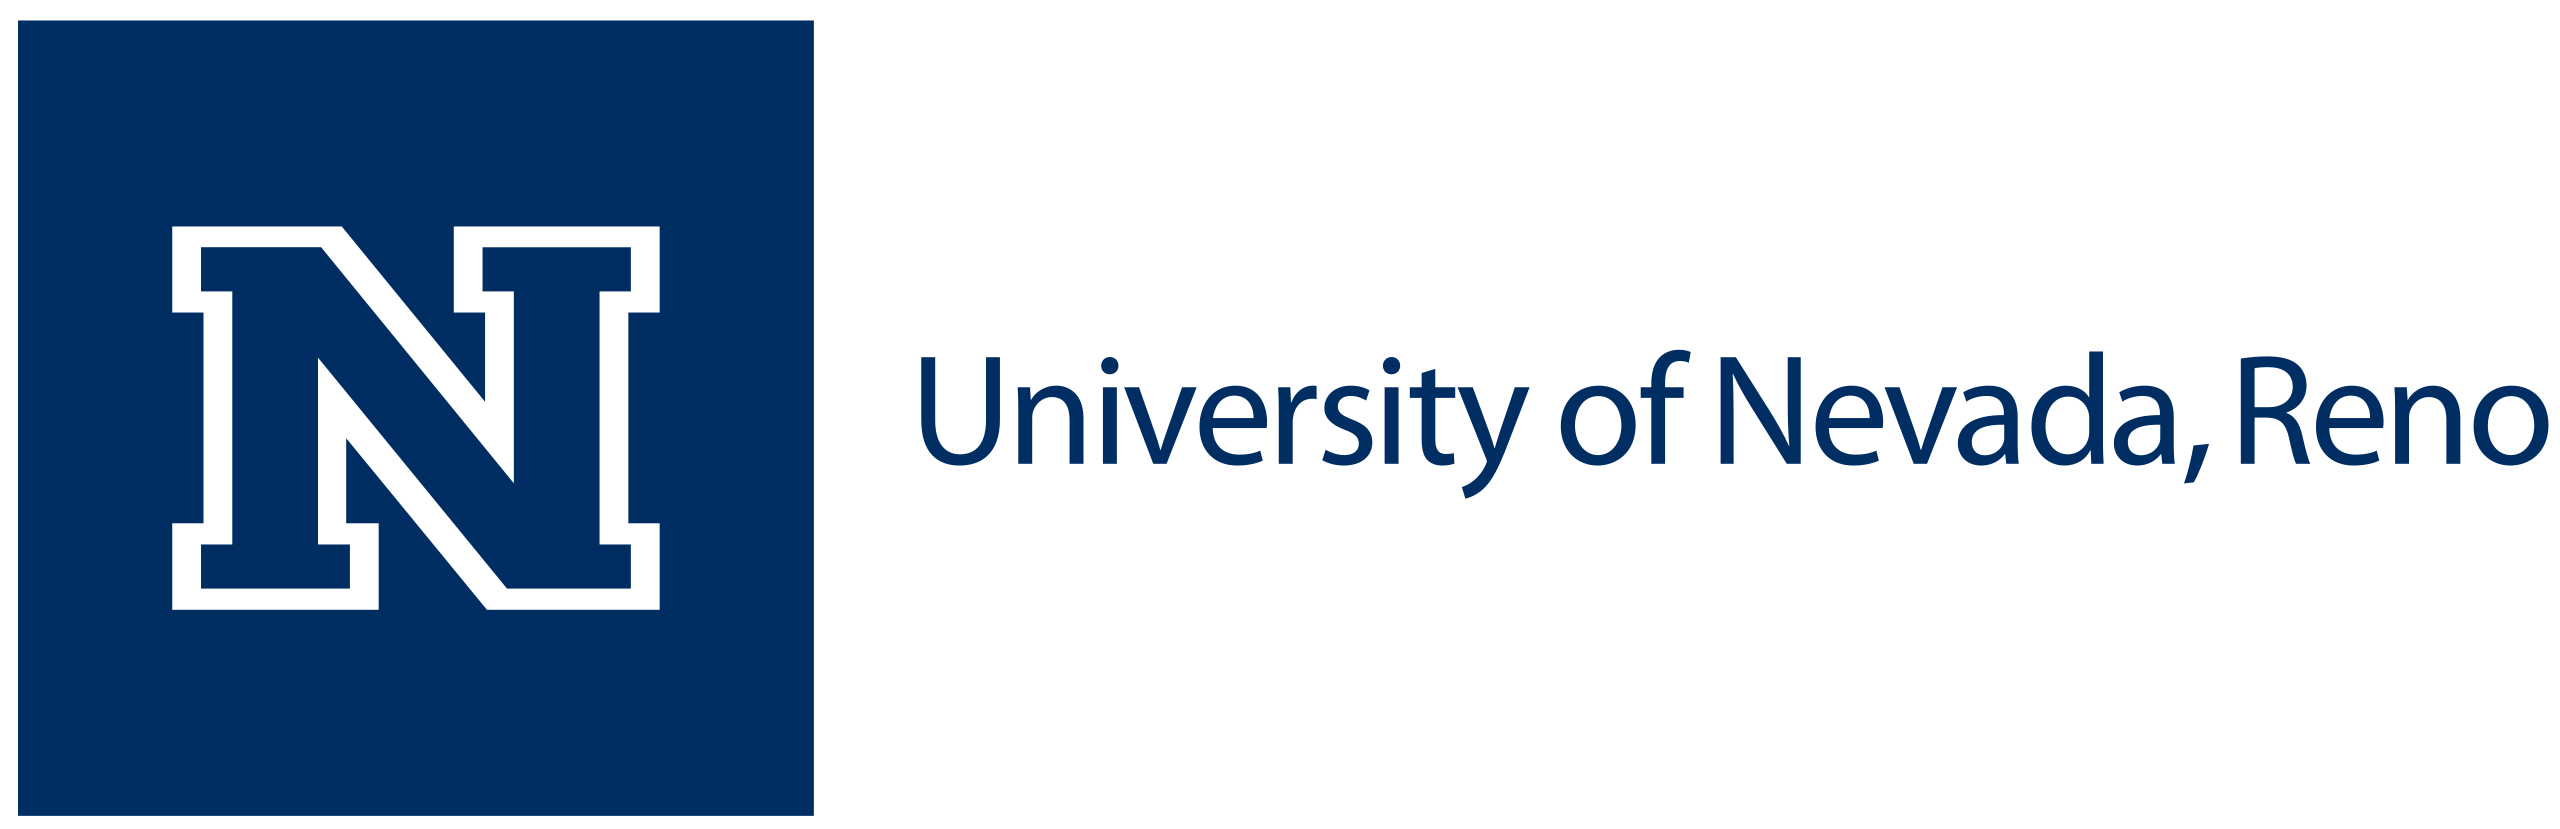 Logo for University of Nevada, Reno